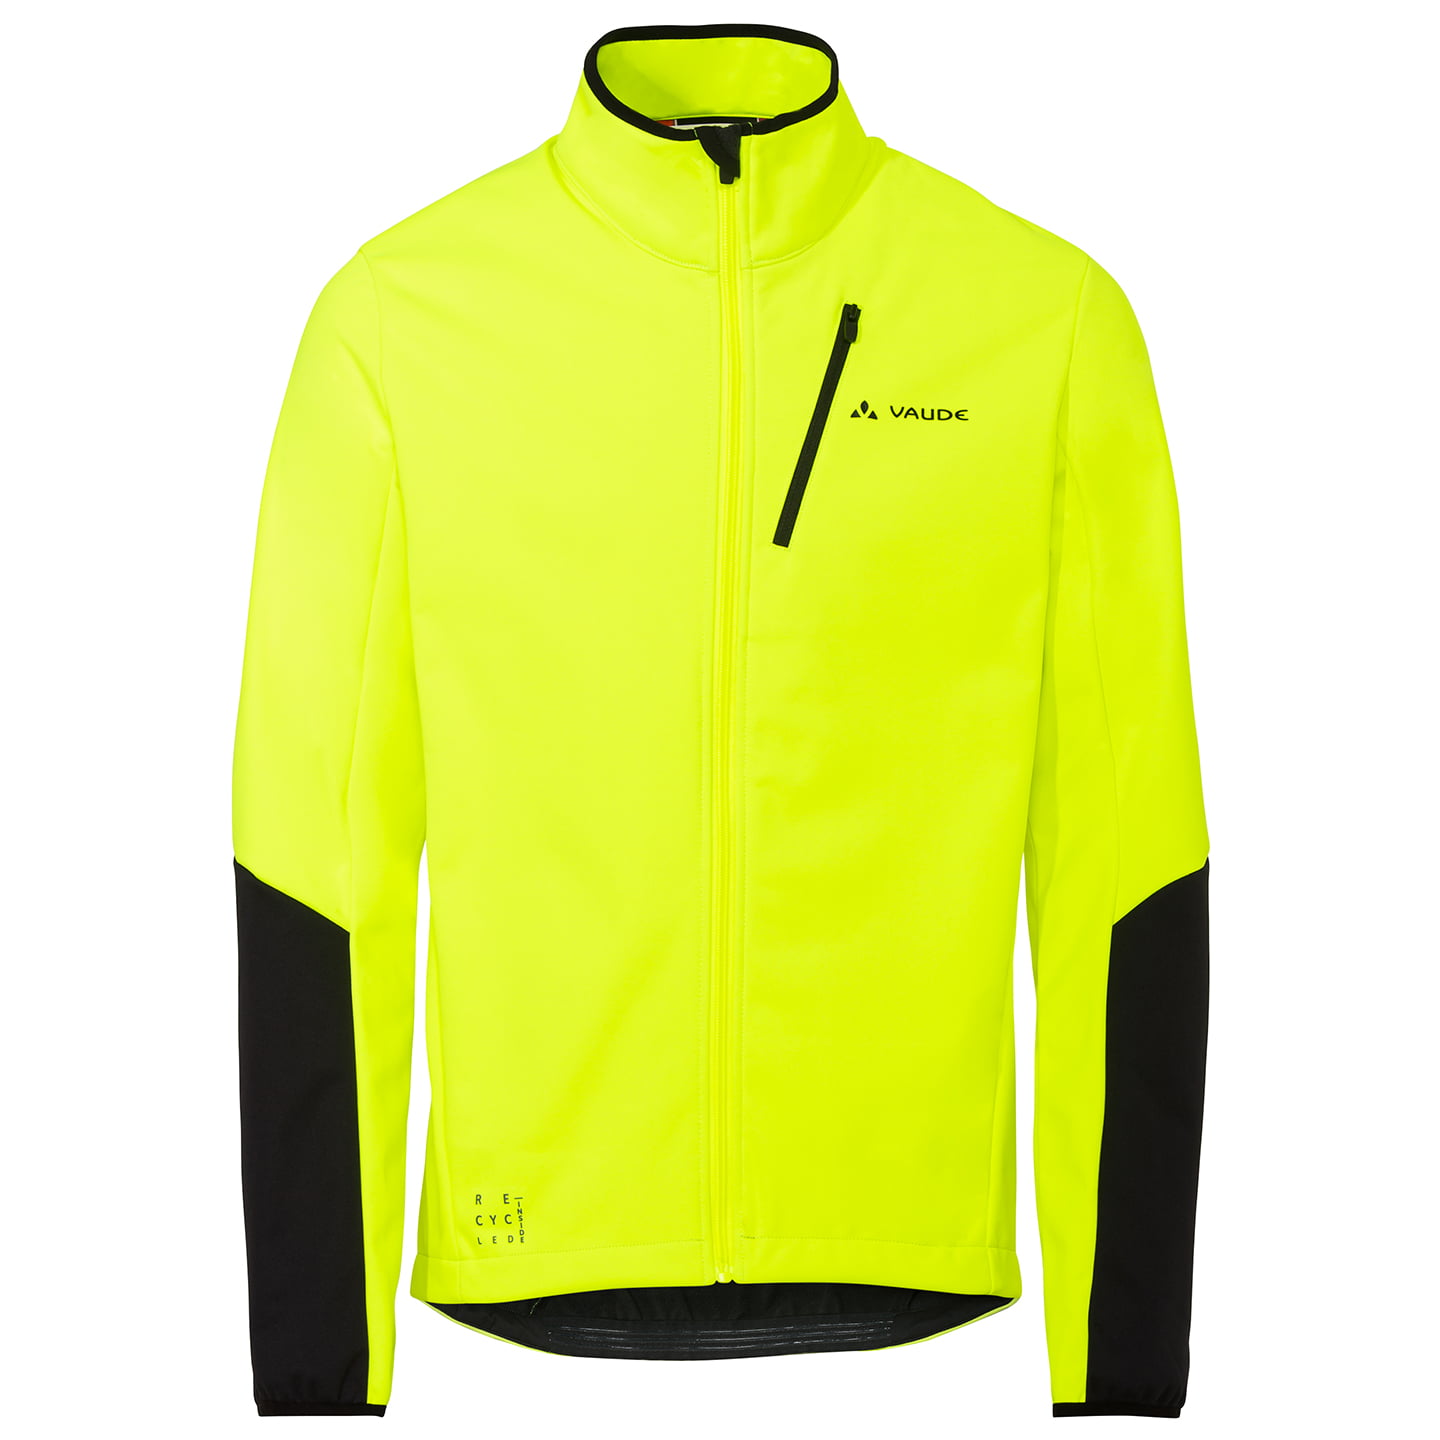 VAUDE Matera II winter jacket Thermal Jacket, for men, size 2XL, Winter jacket, Cycling clothing